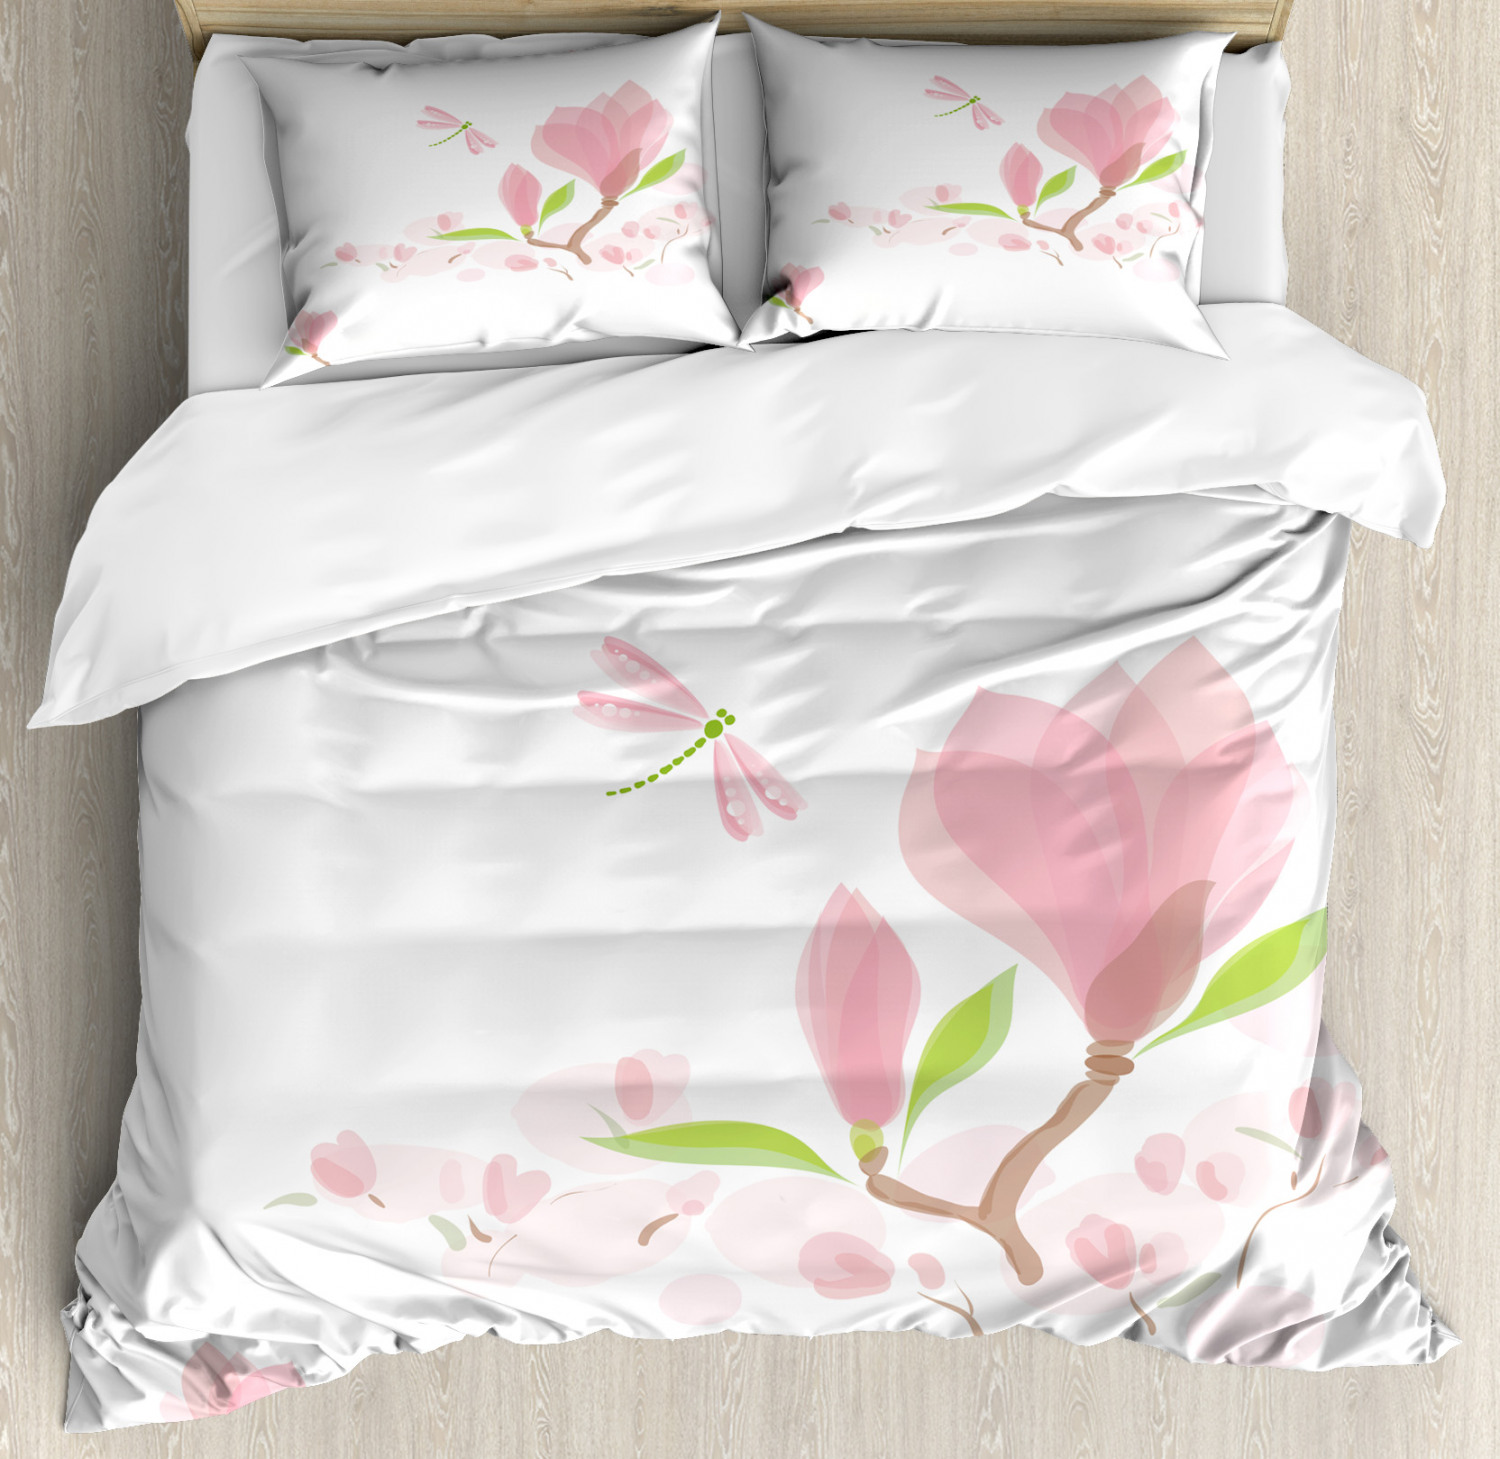 Bedding: Duvets, Sheets & Shams Shop - Magnolia